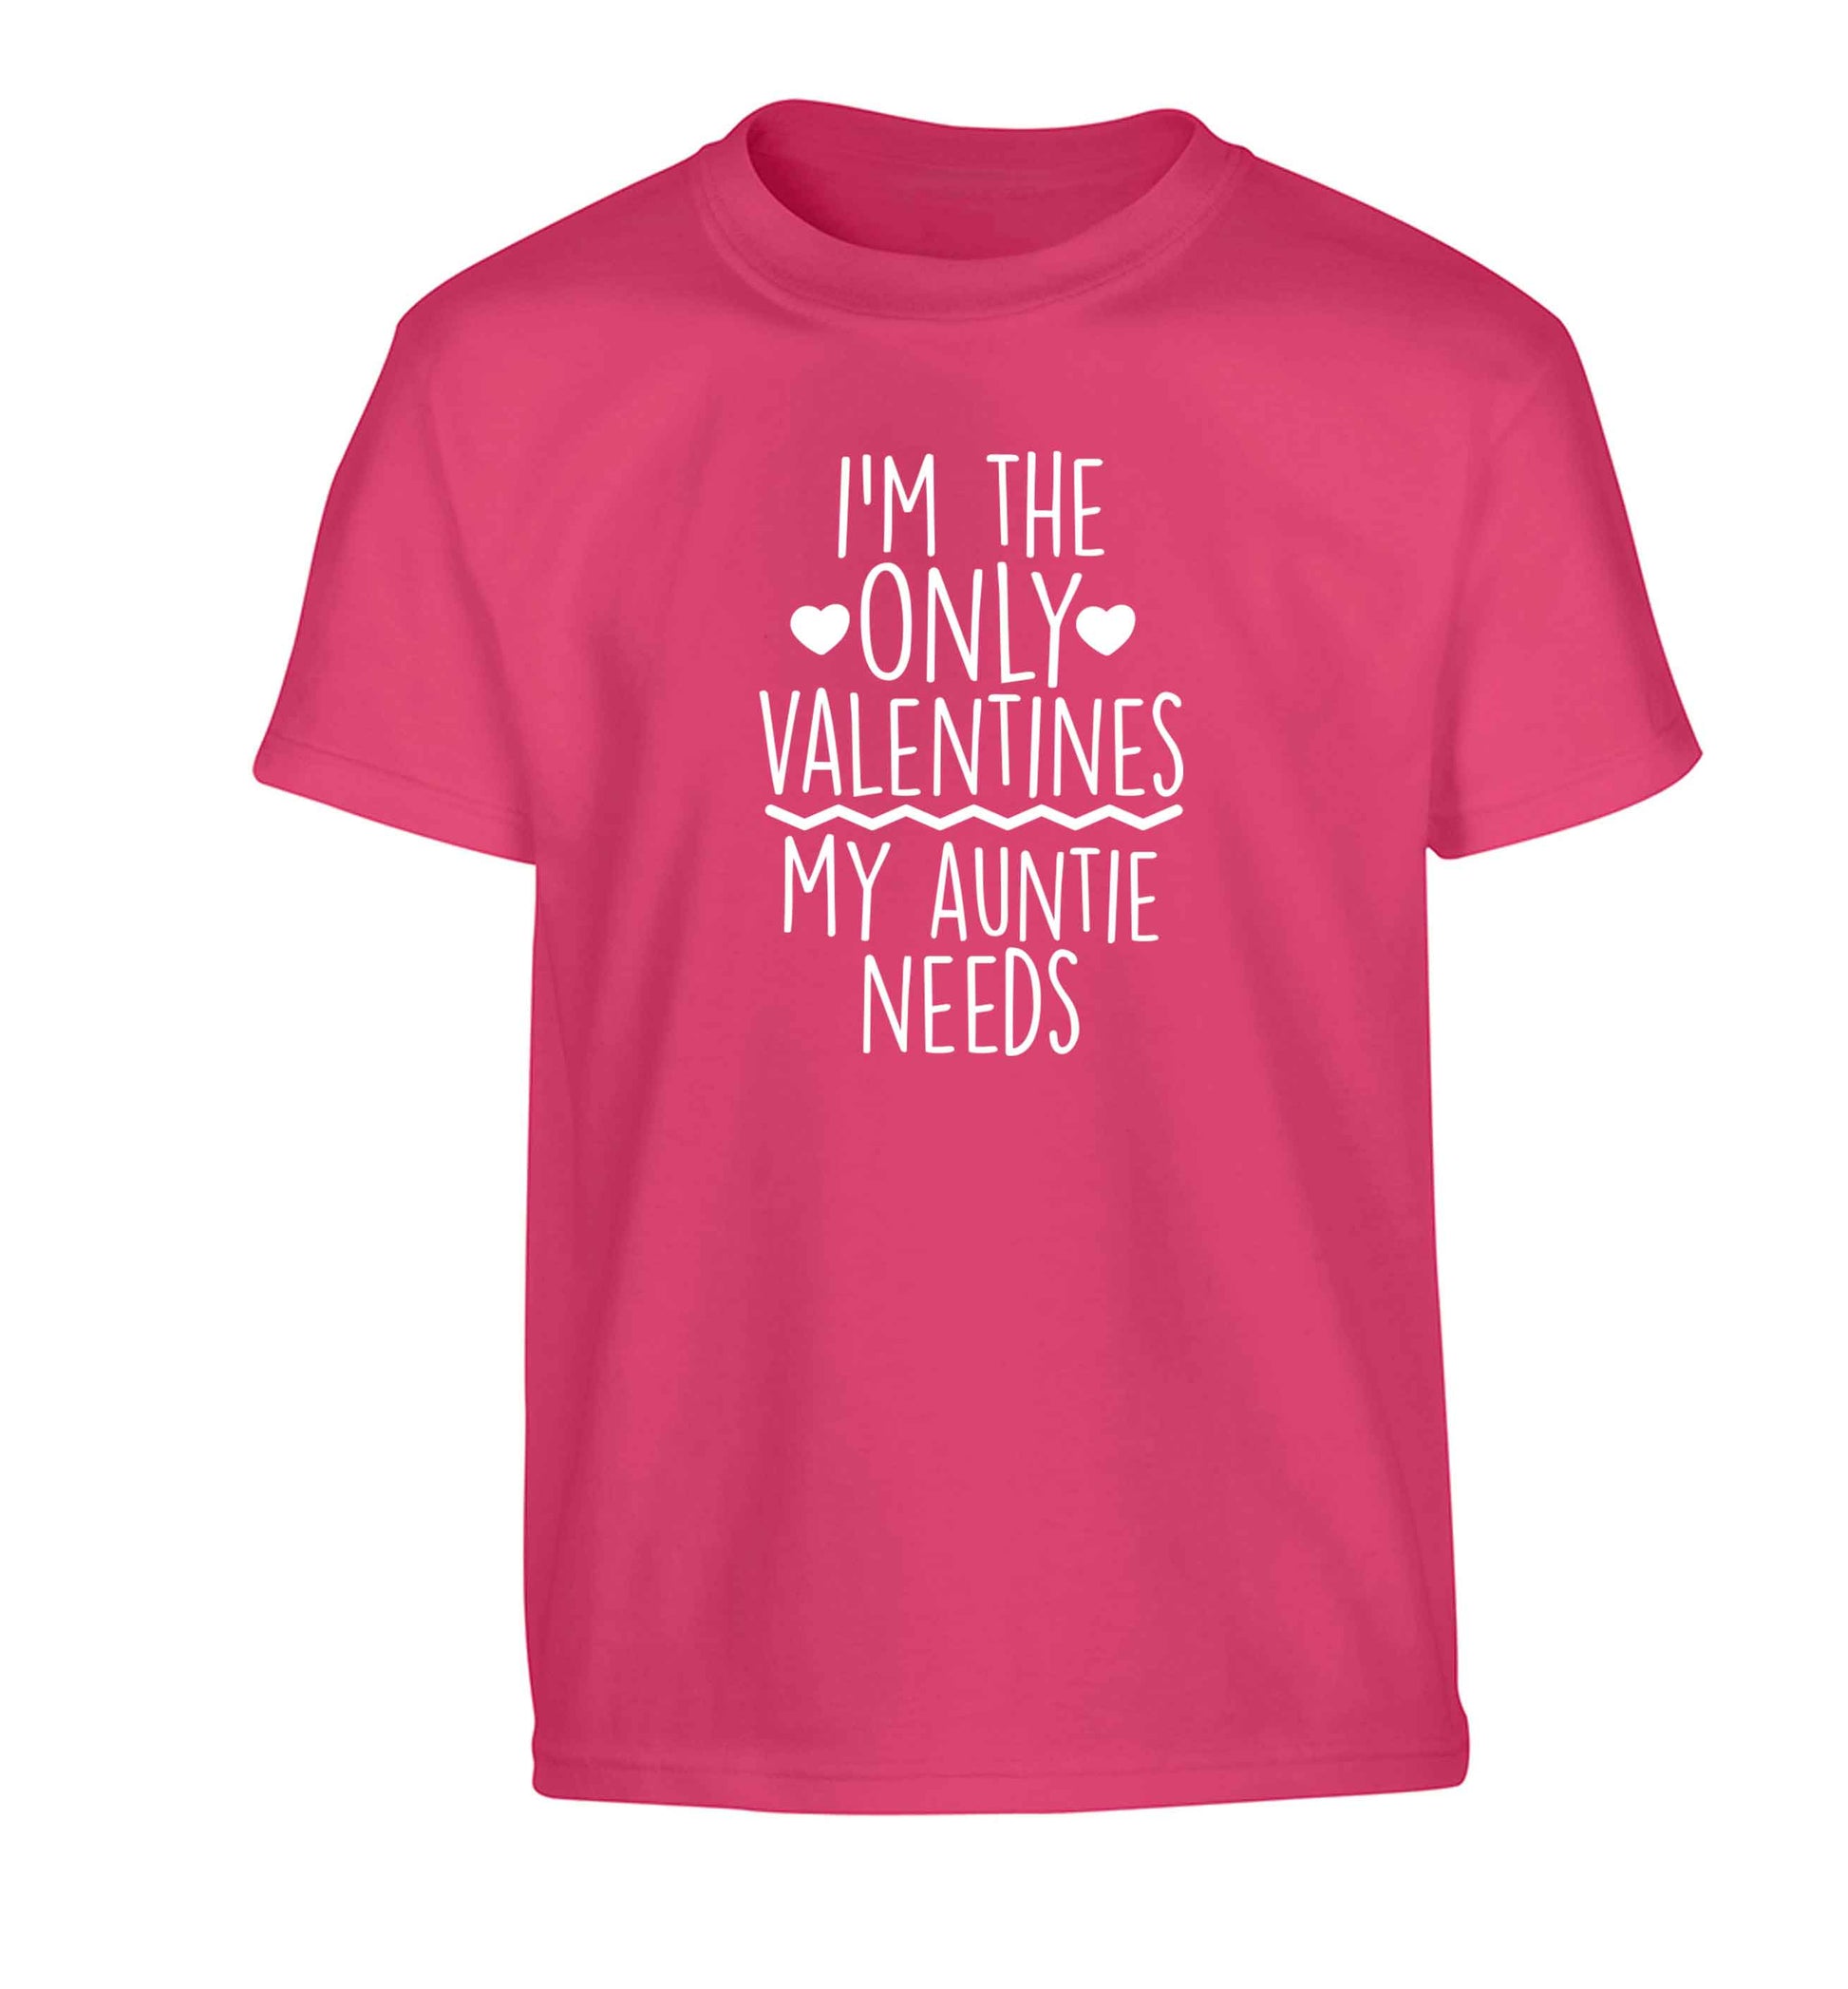 I'm the only valentines my auntie needs Children's pink Tshirt 12-13 Years